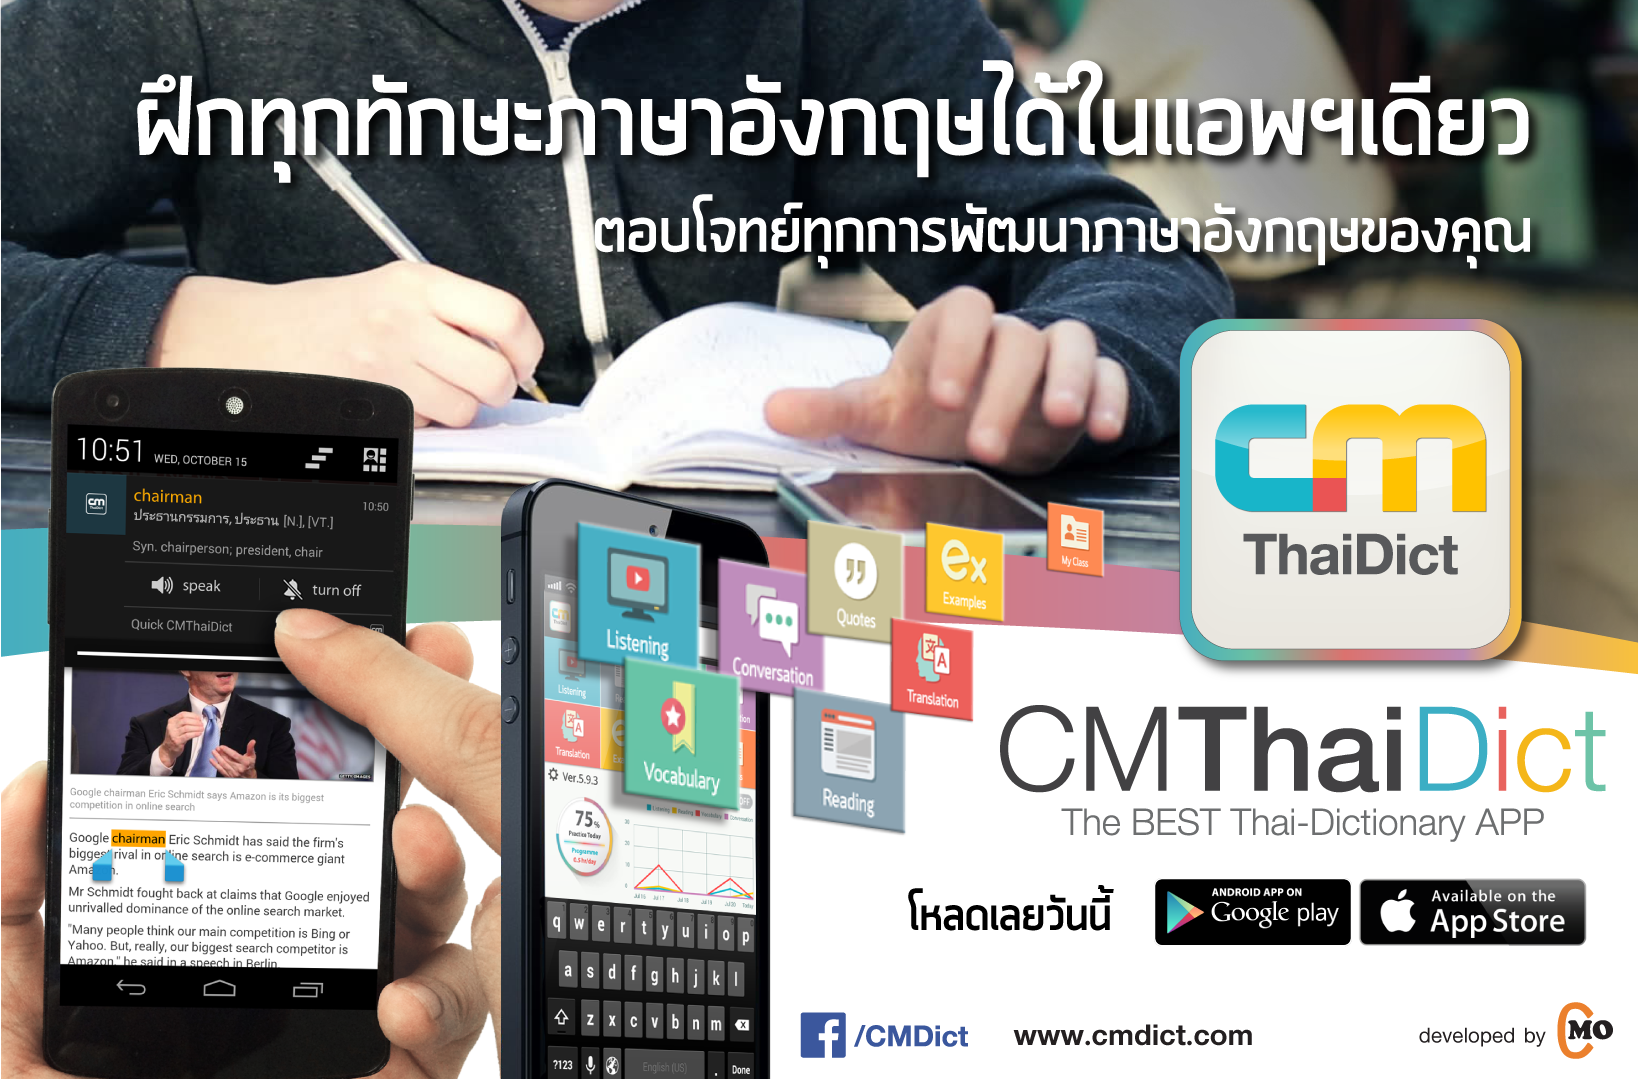 Cm Thai Dict - ซีเอ็ม ไทยดิกชันนารี บน Android ( พจนานุกรมไทยความสามารถสูง  ที่ผู้ใช้ Android ทุกคนควรมีติดเครื่อง ) | Blognone